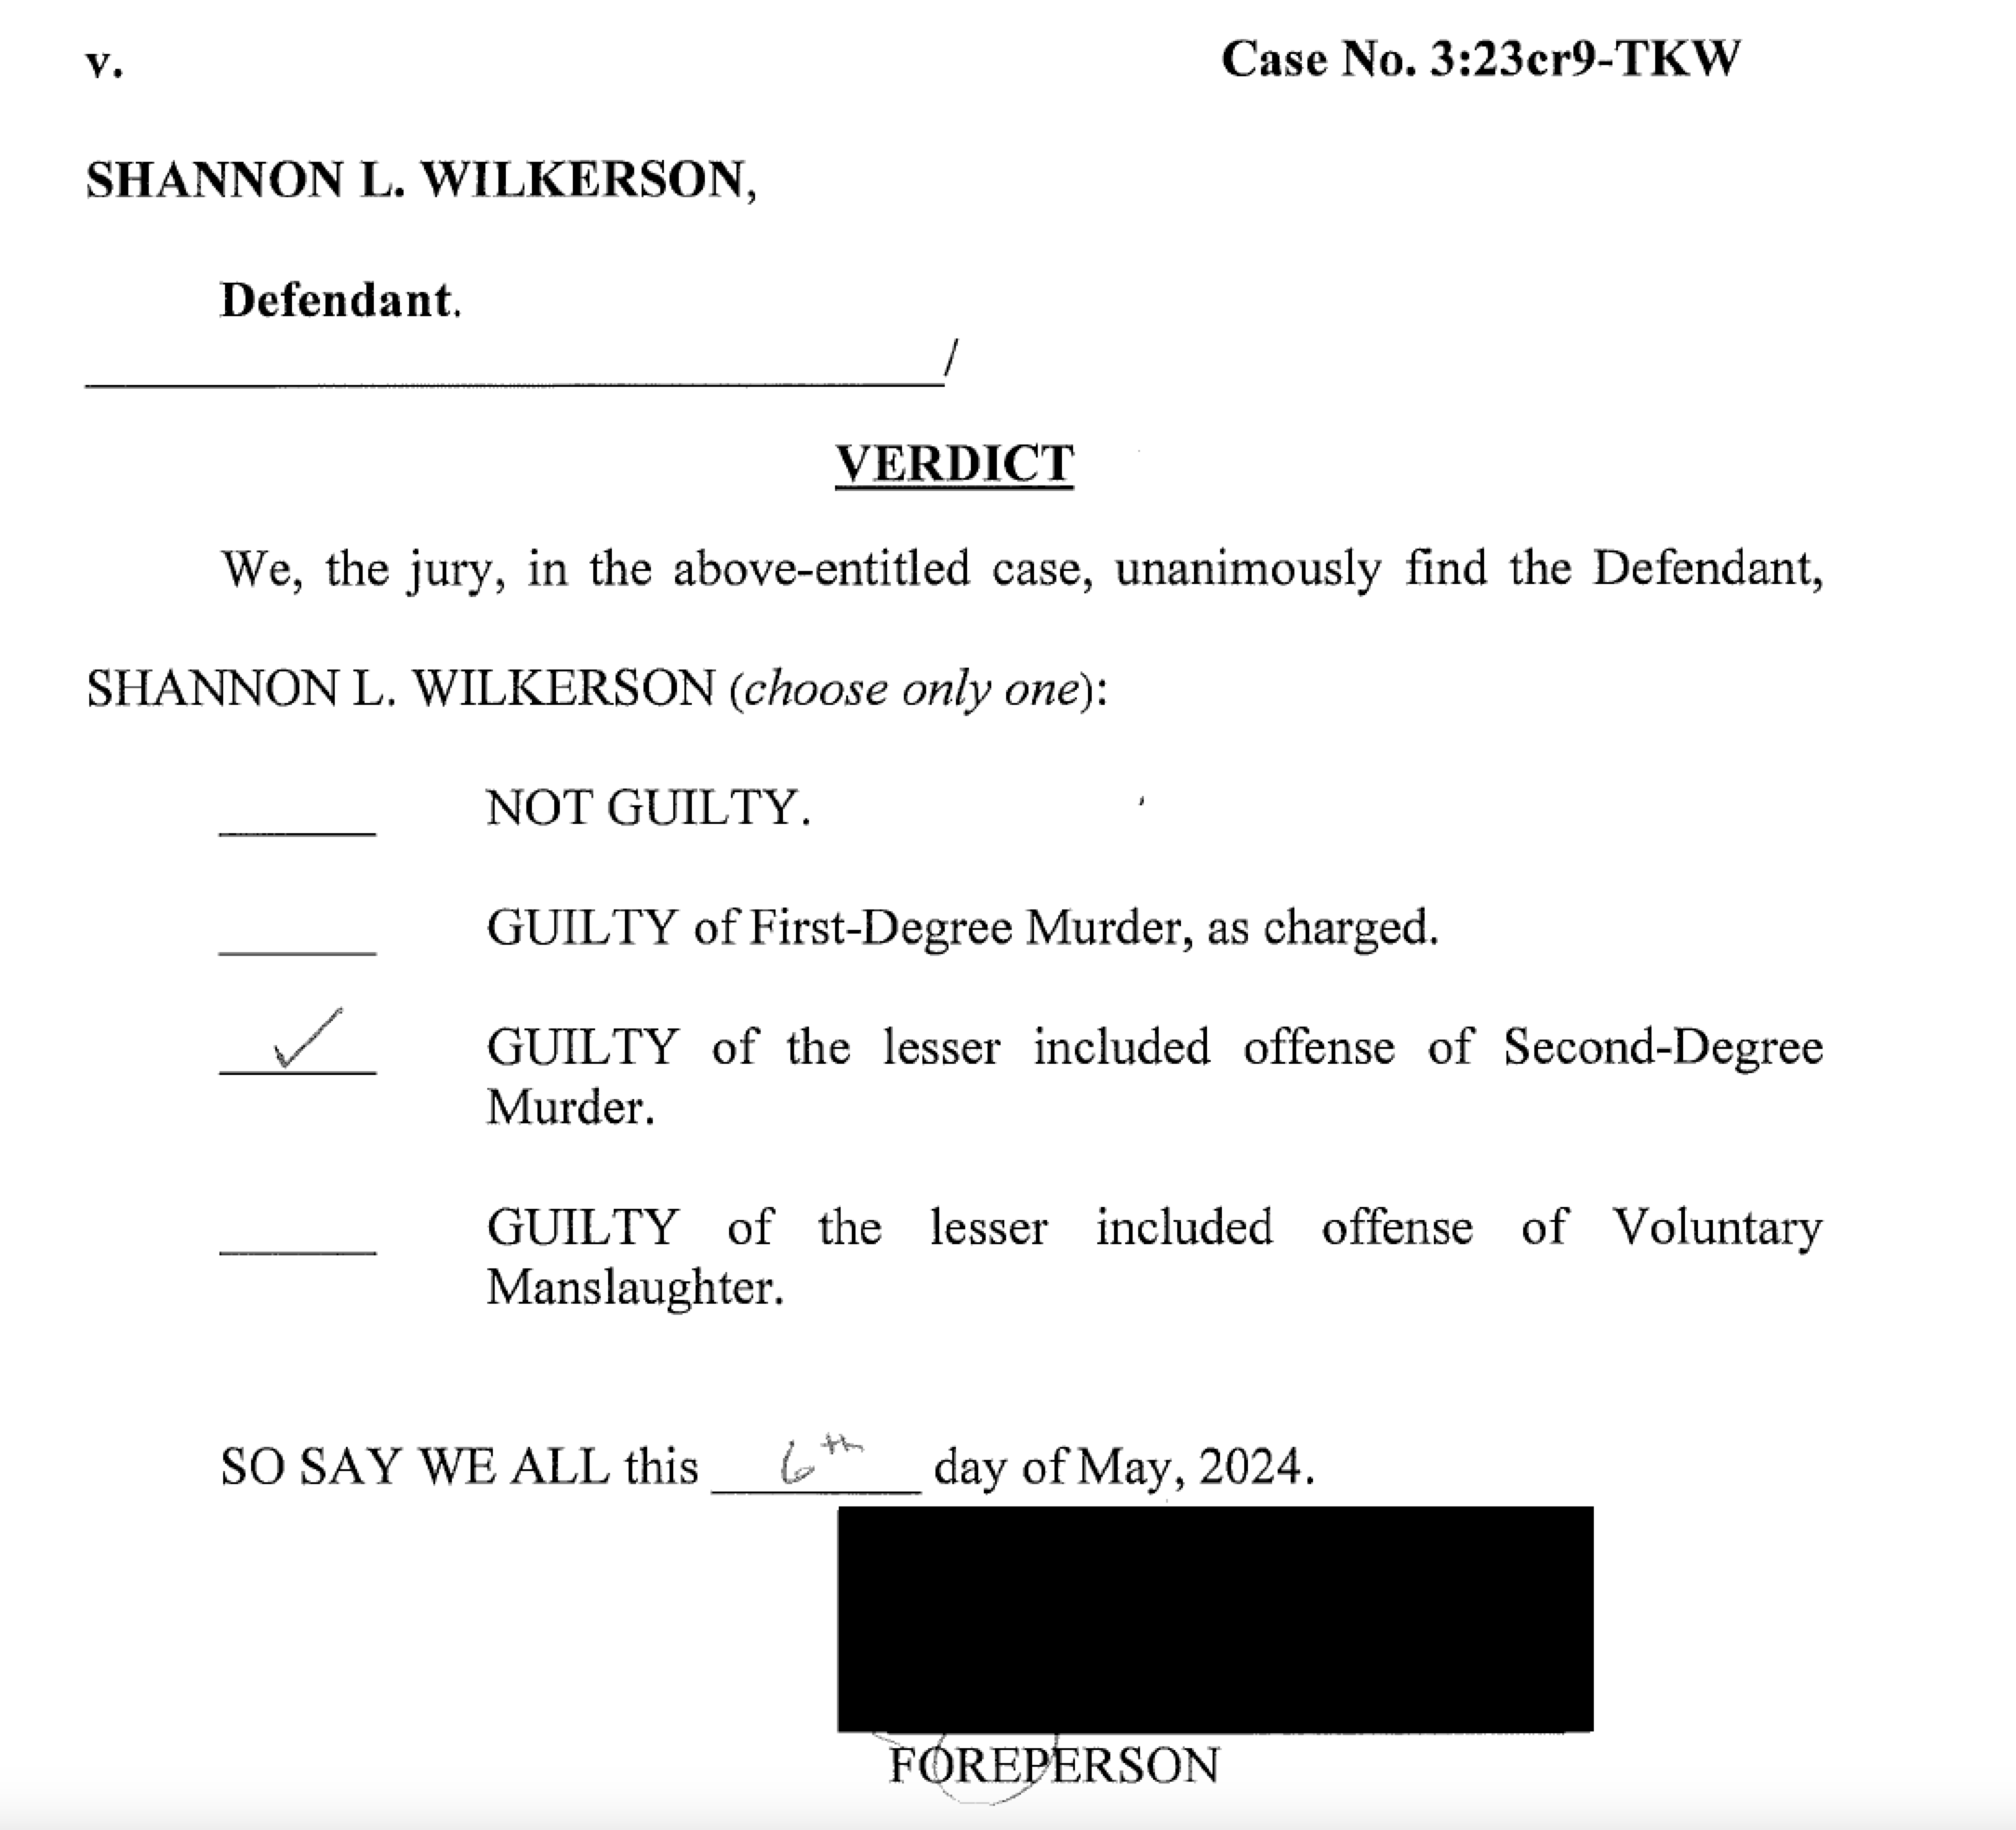 Shannon Wilkerson verdict sheet.